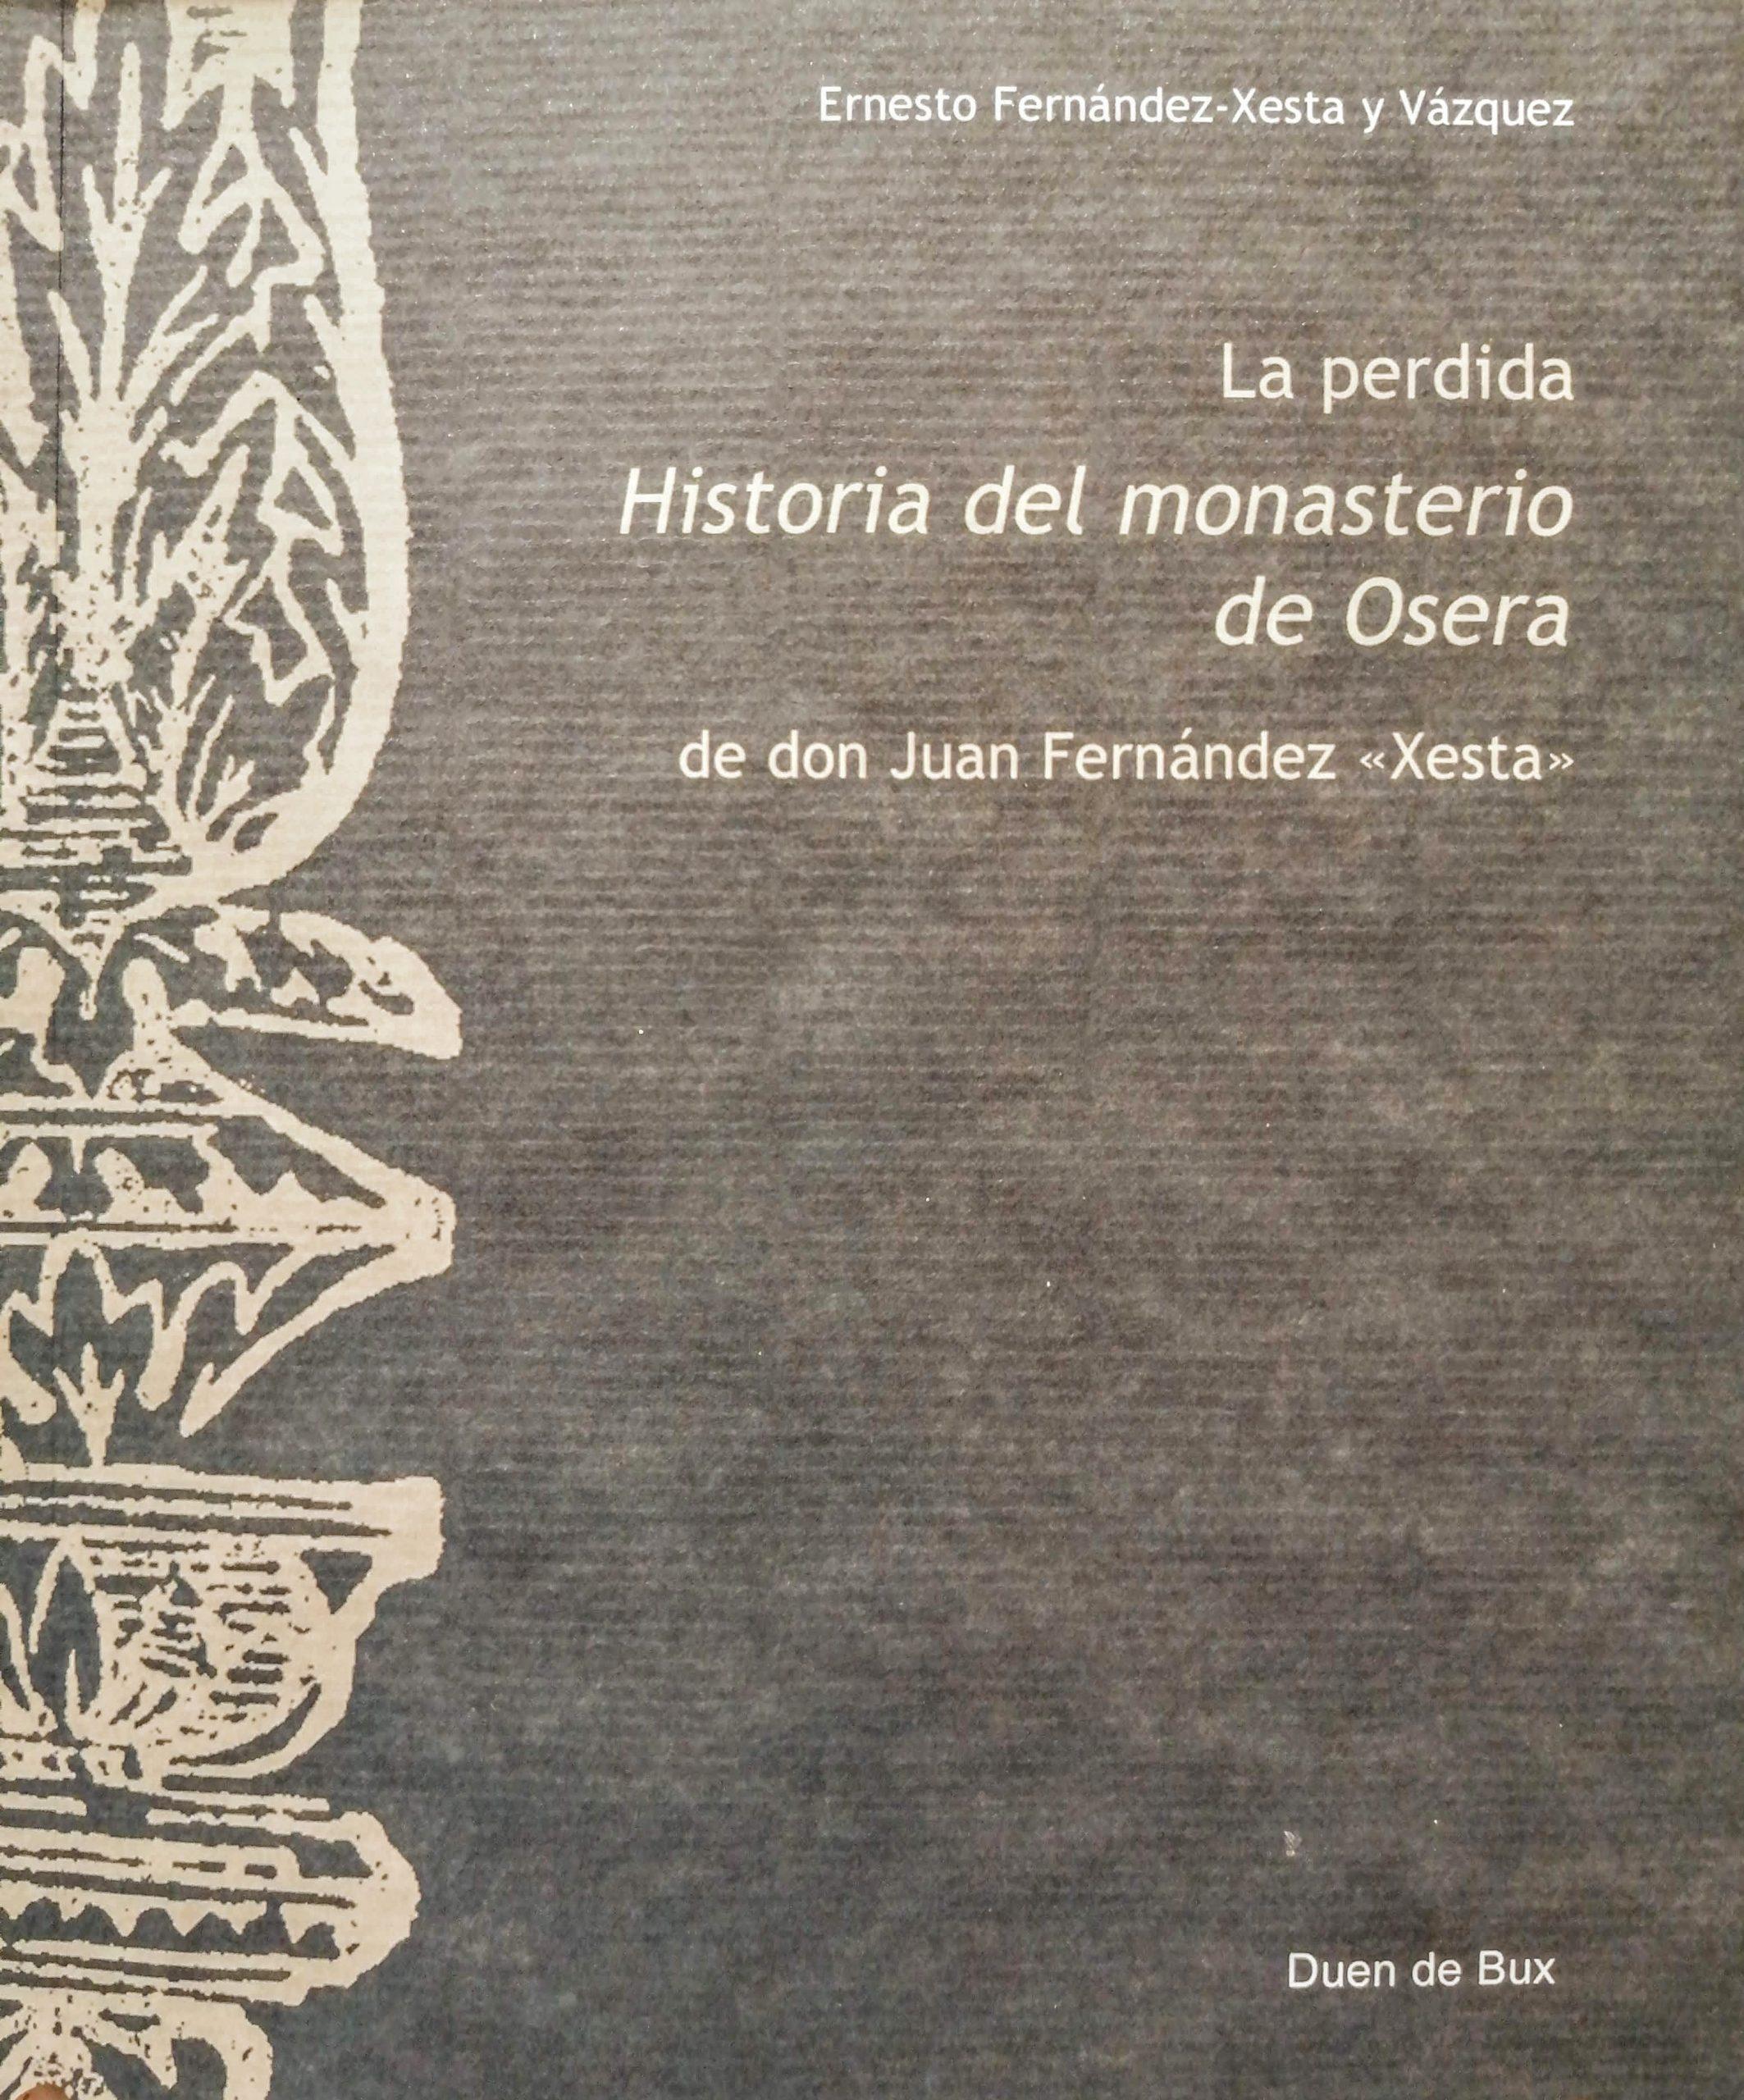 La perdida "Historia del monasterio de Osera. 